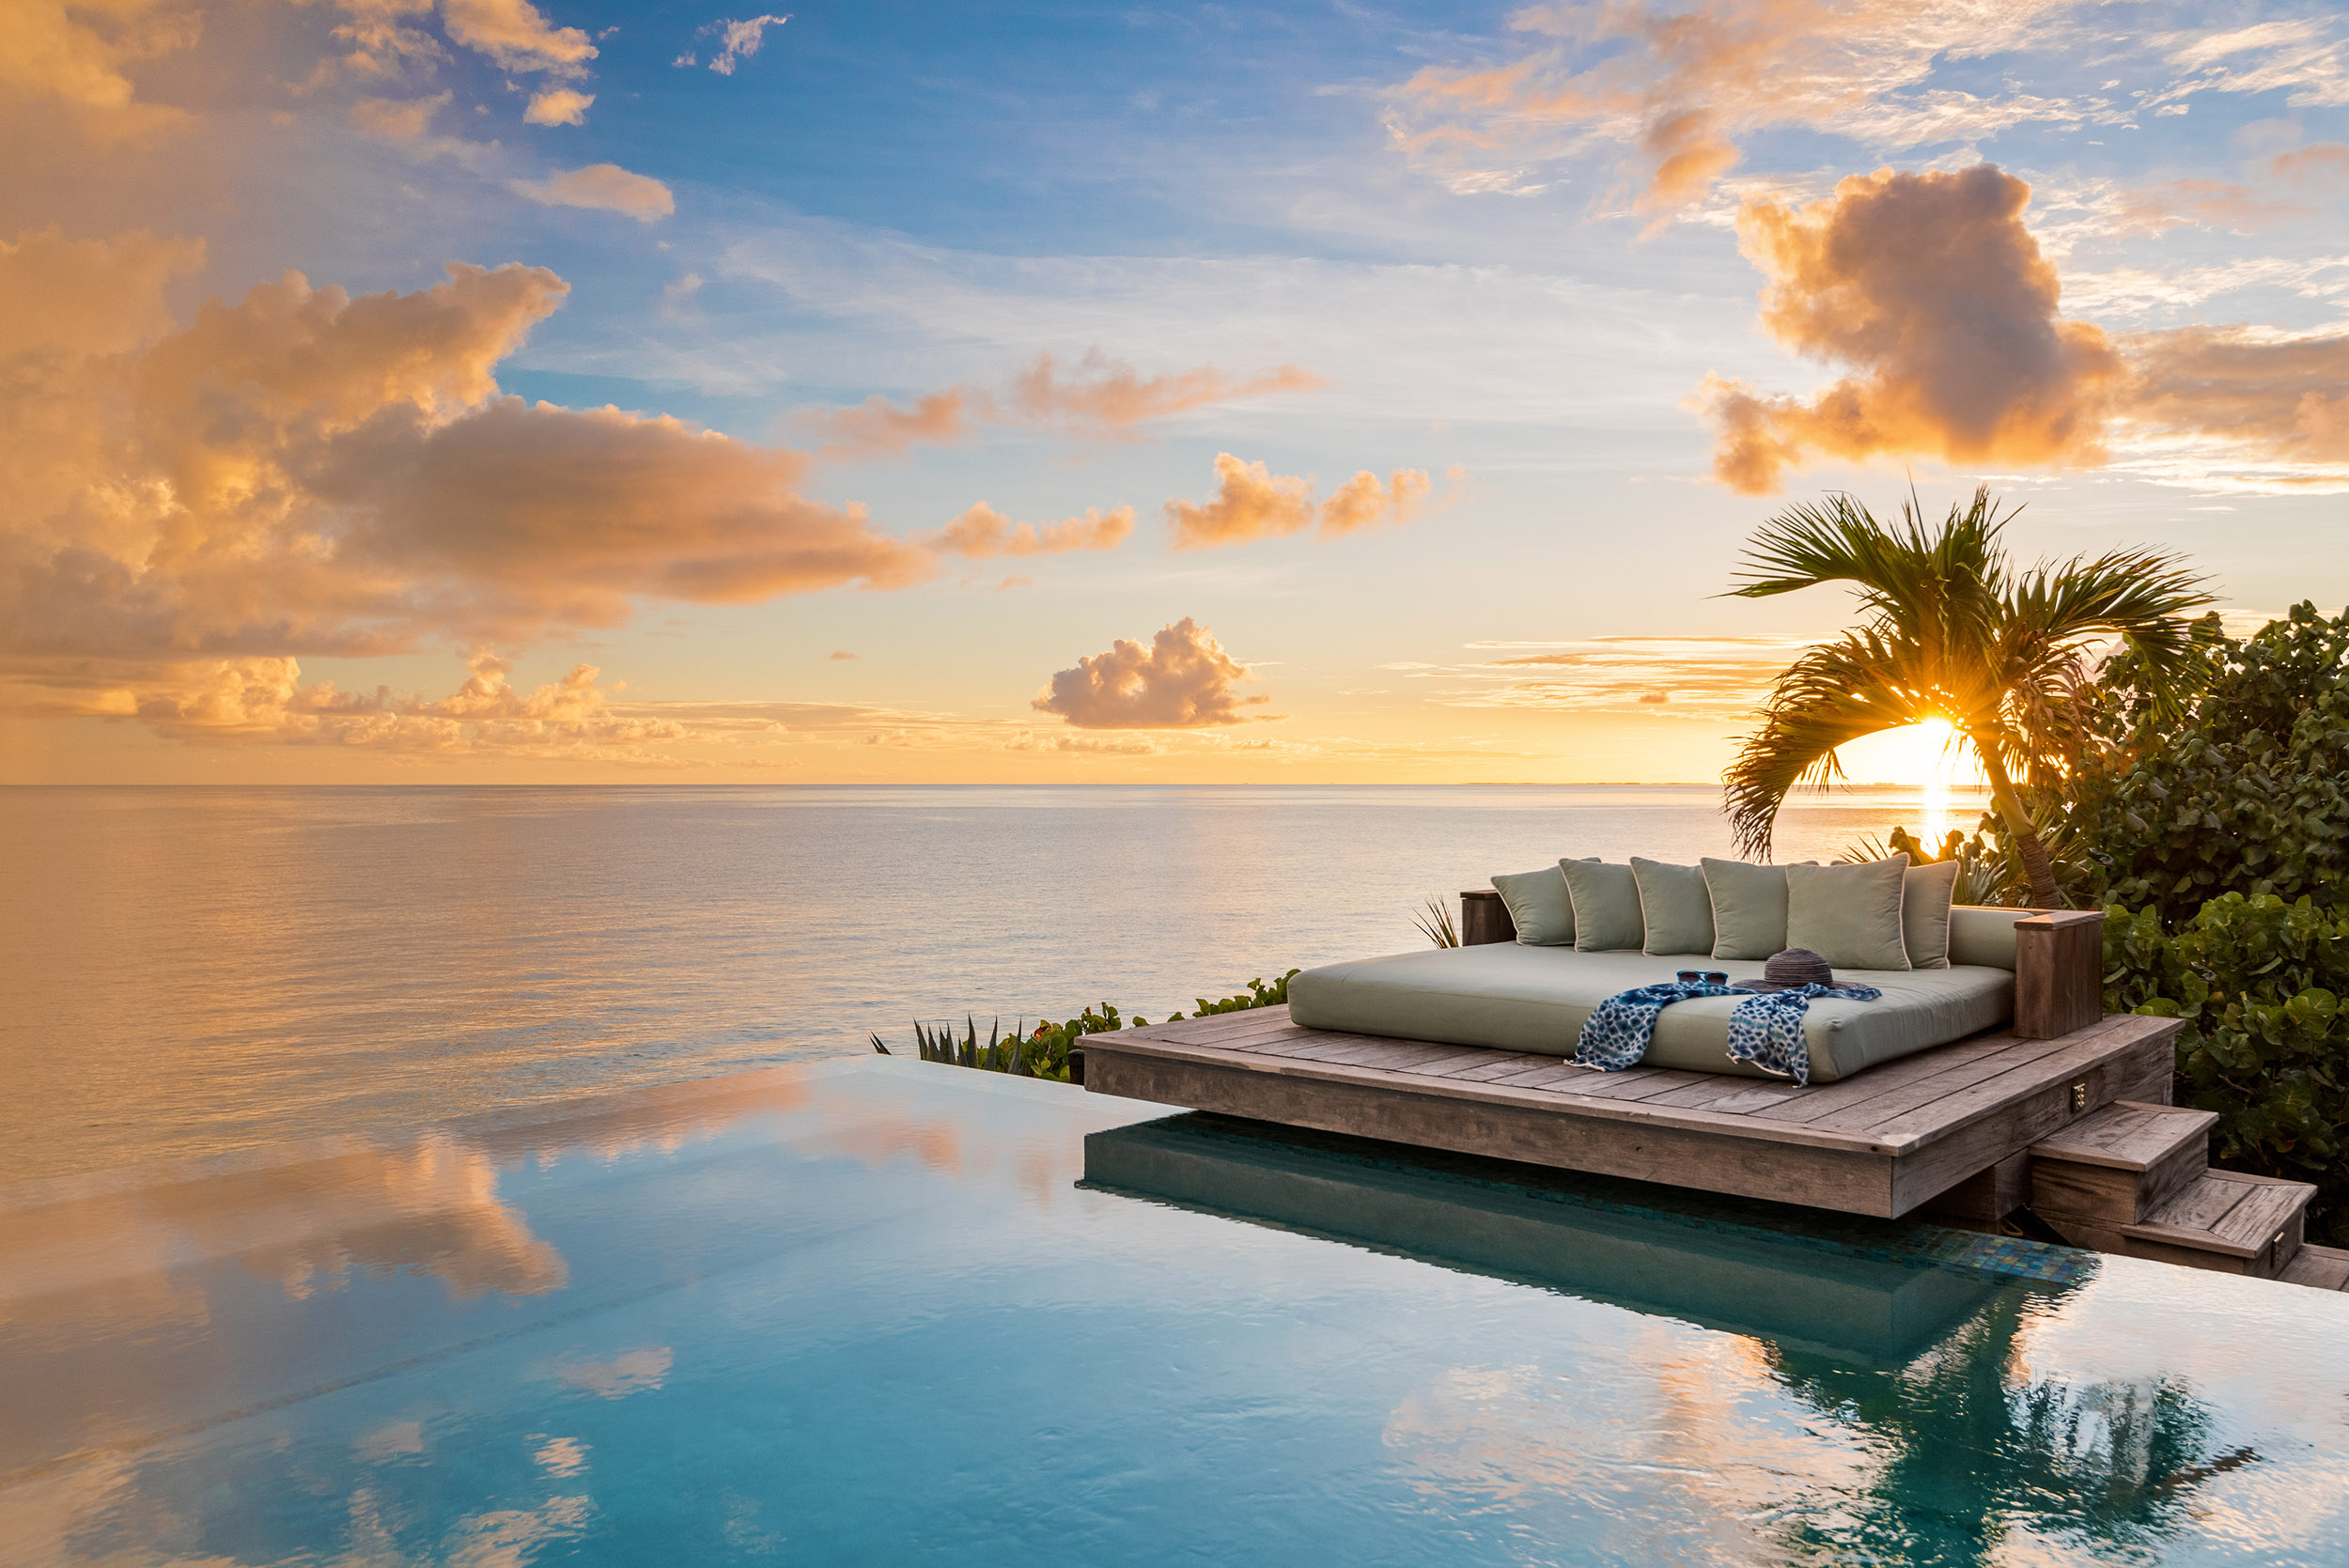 Dream Big Villa - sunset view across the pool